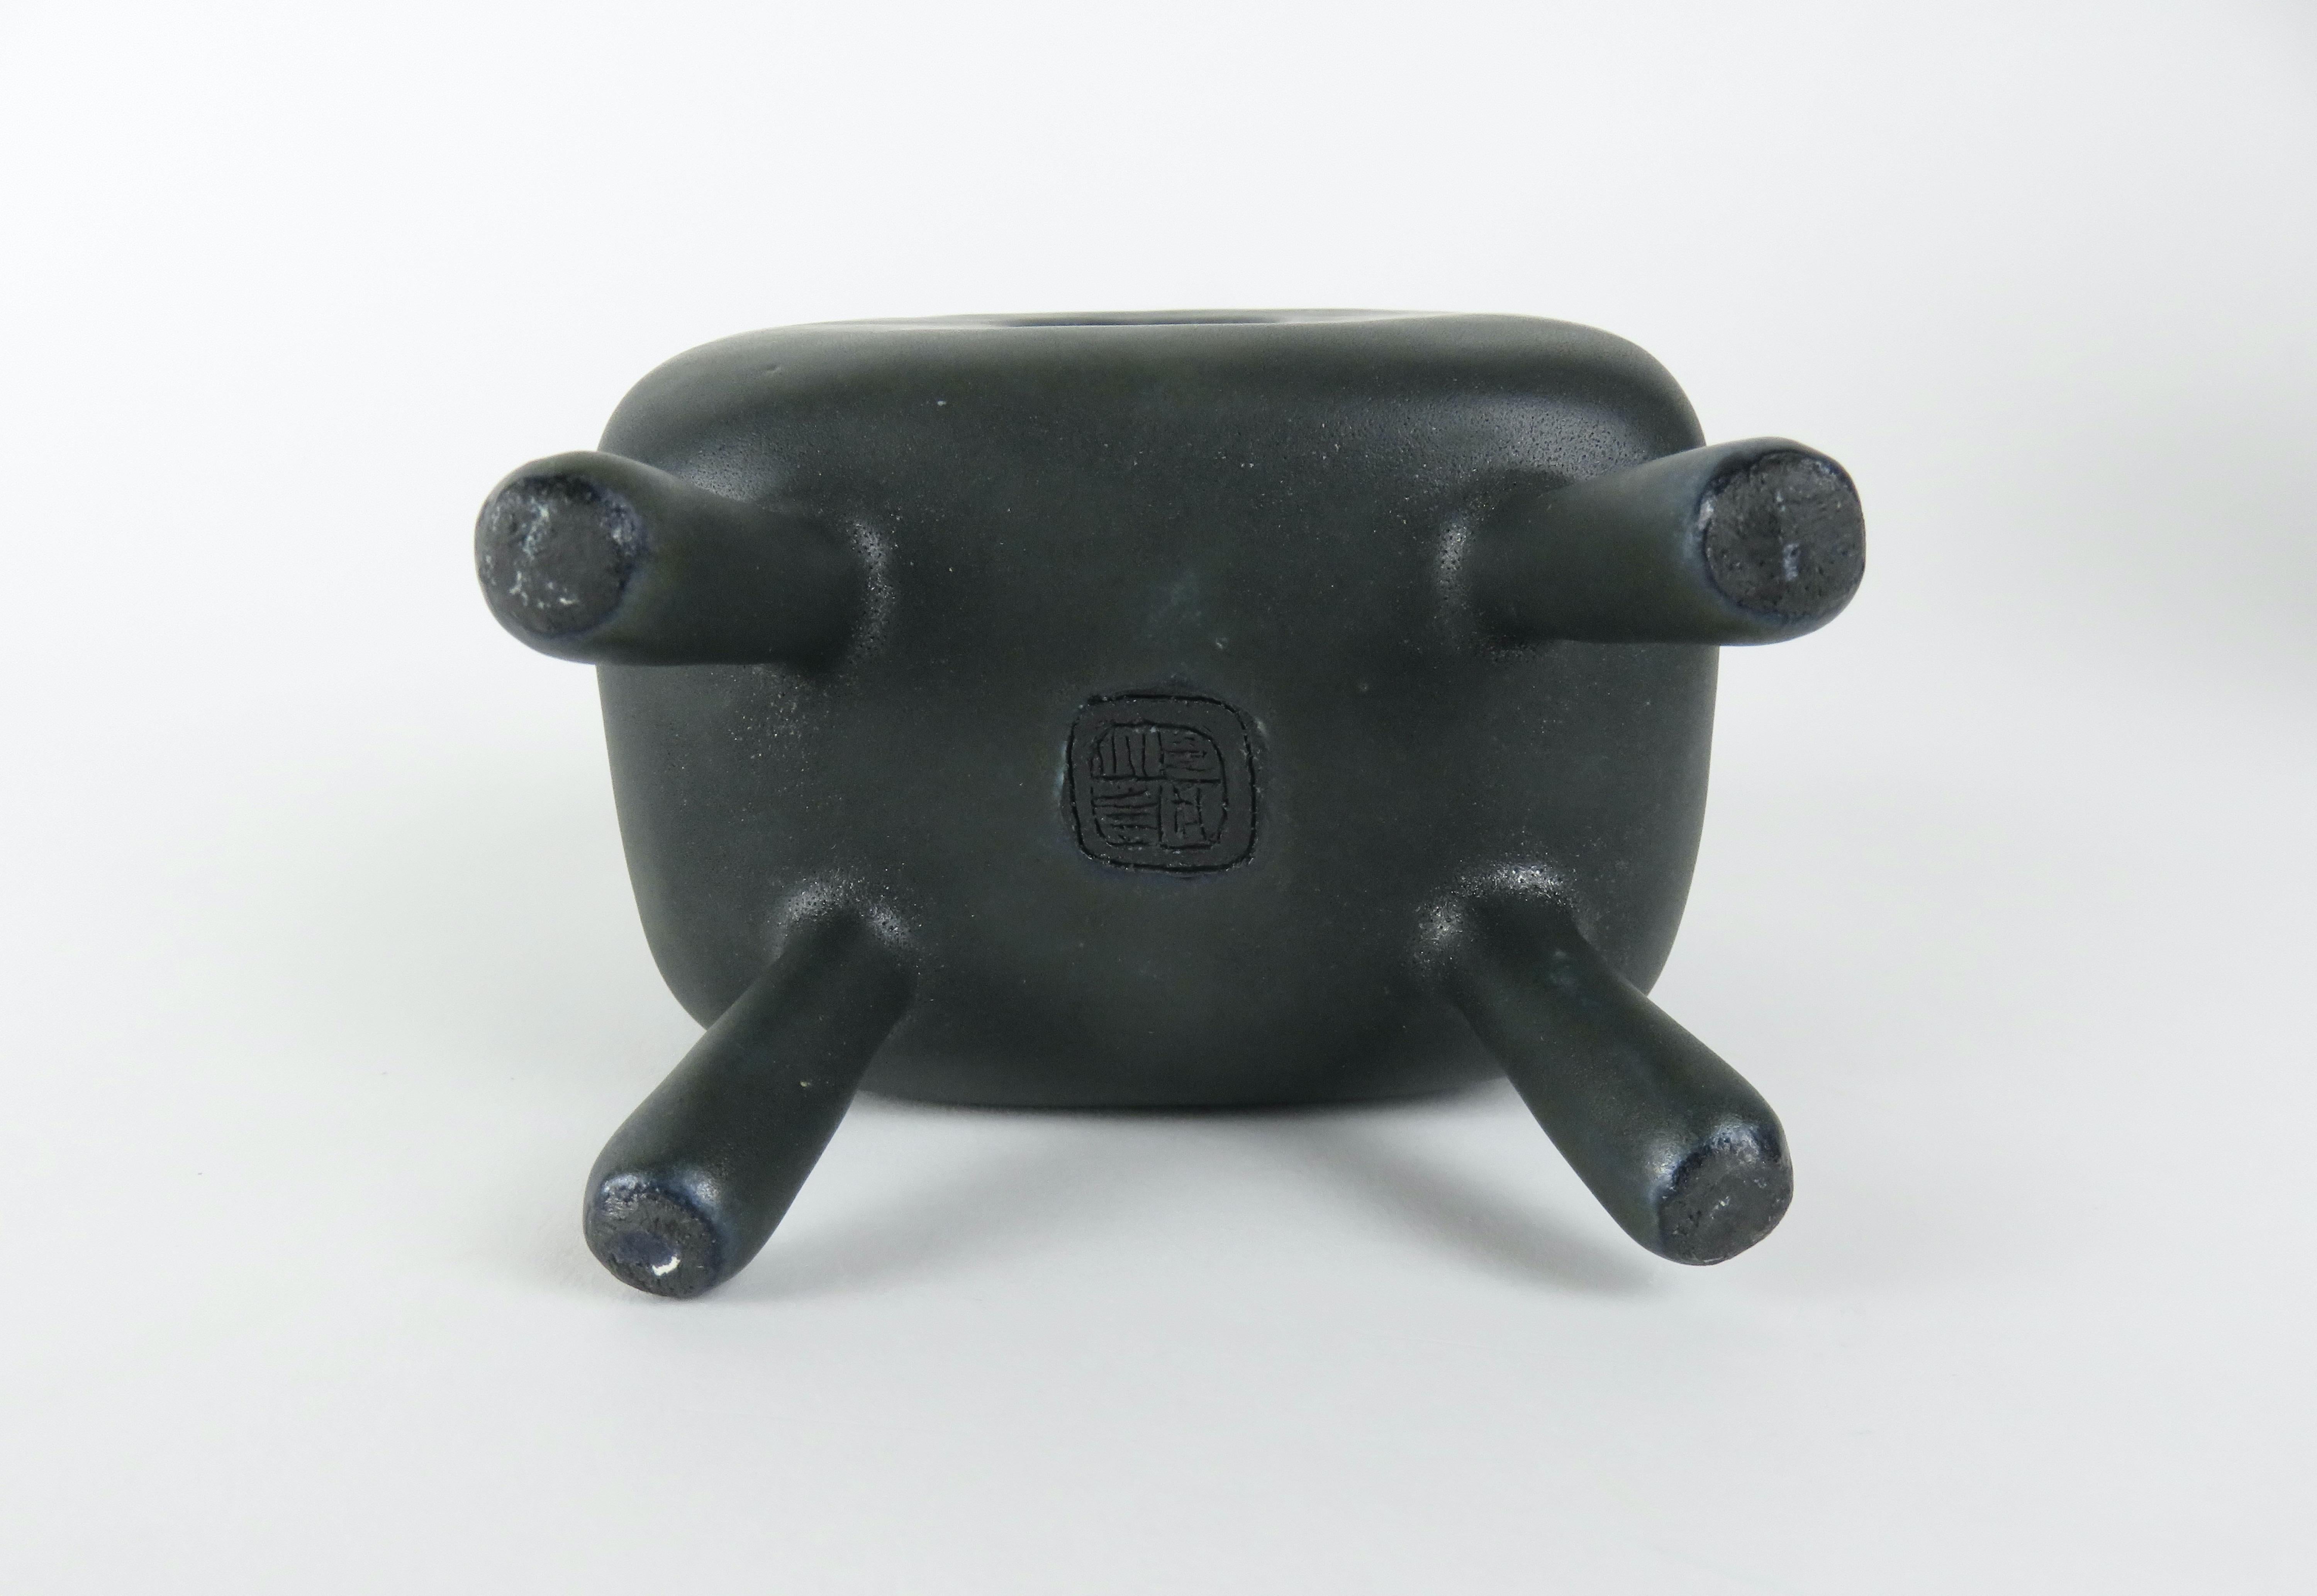 Smooth Black Glazed Ceramic Cube with Square Center Opening, 4 Legs, Handbuilt 3